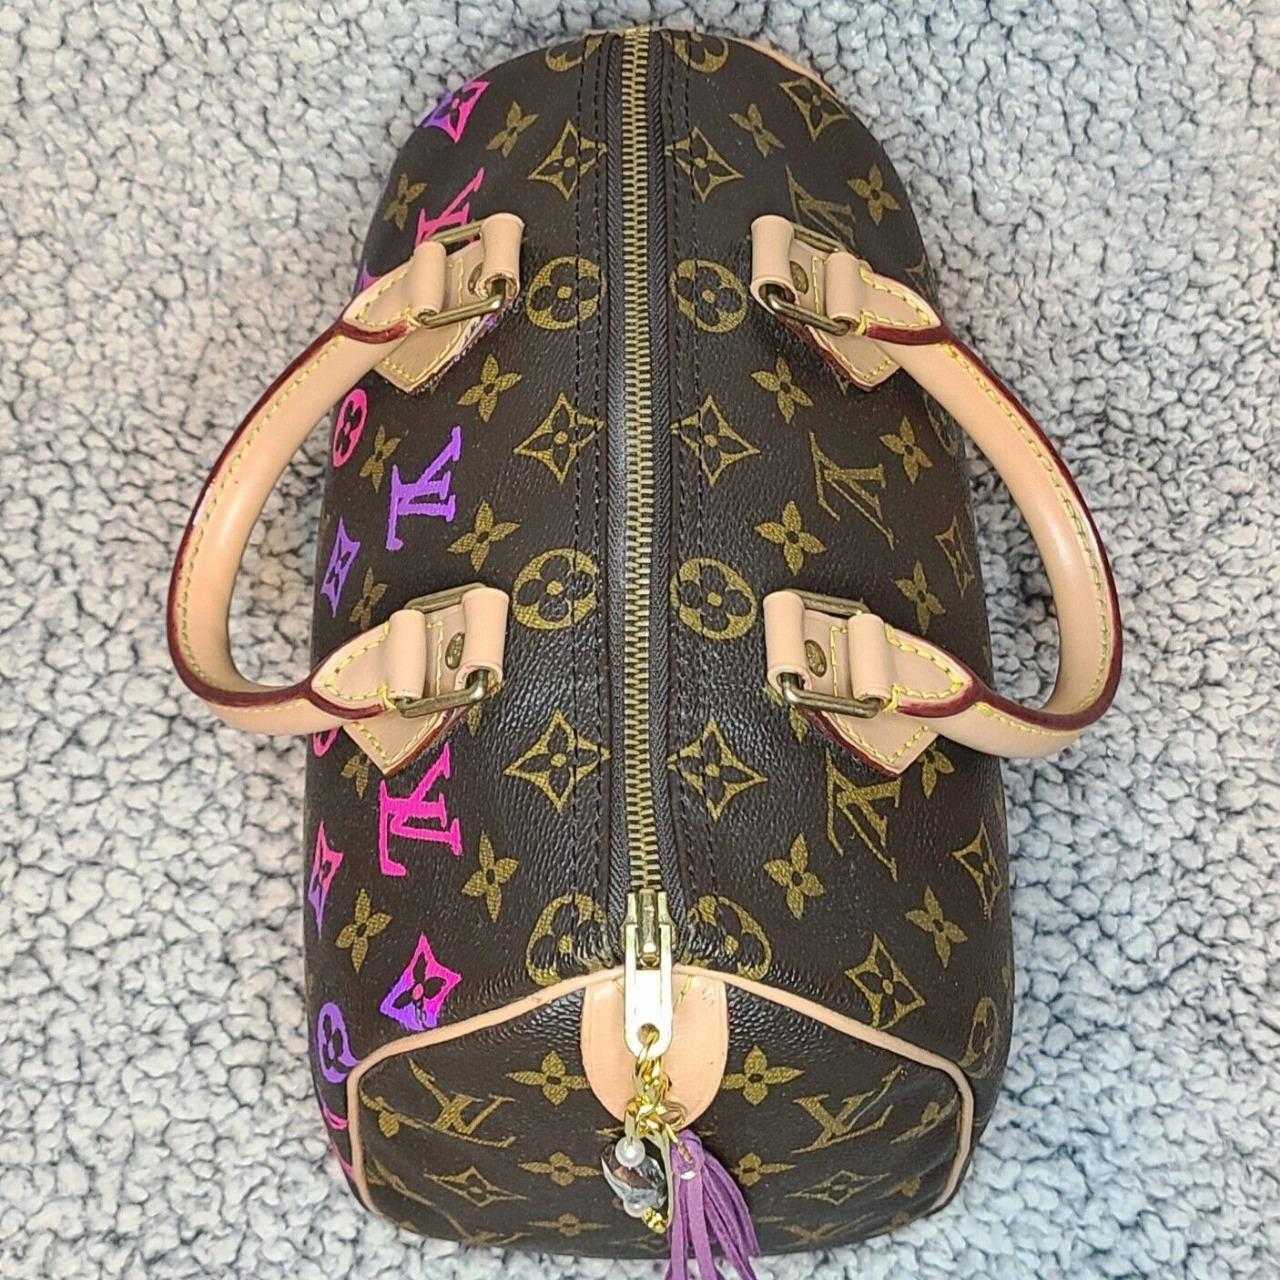 Superb Louis Vuitton Speedy bag 25 in custom Monogram canvas